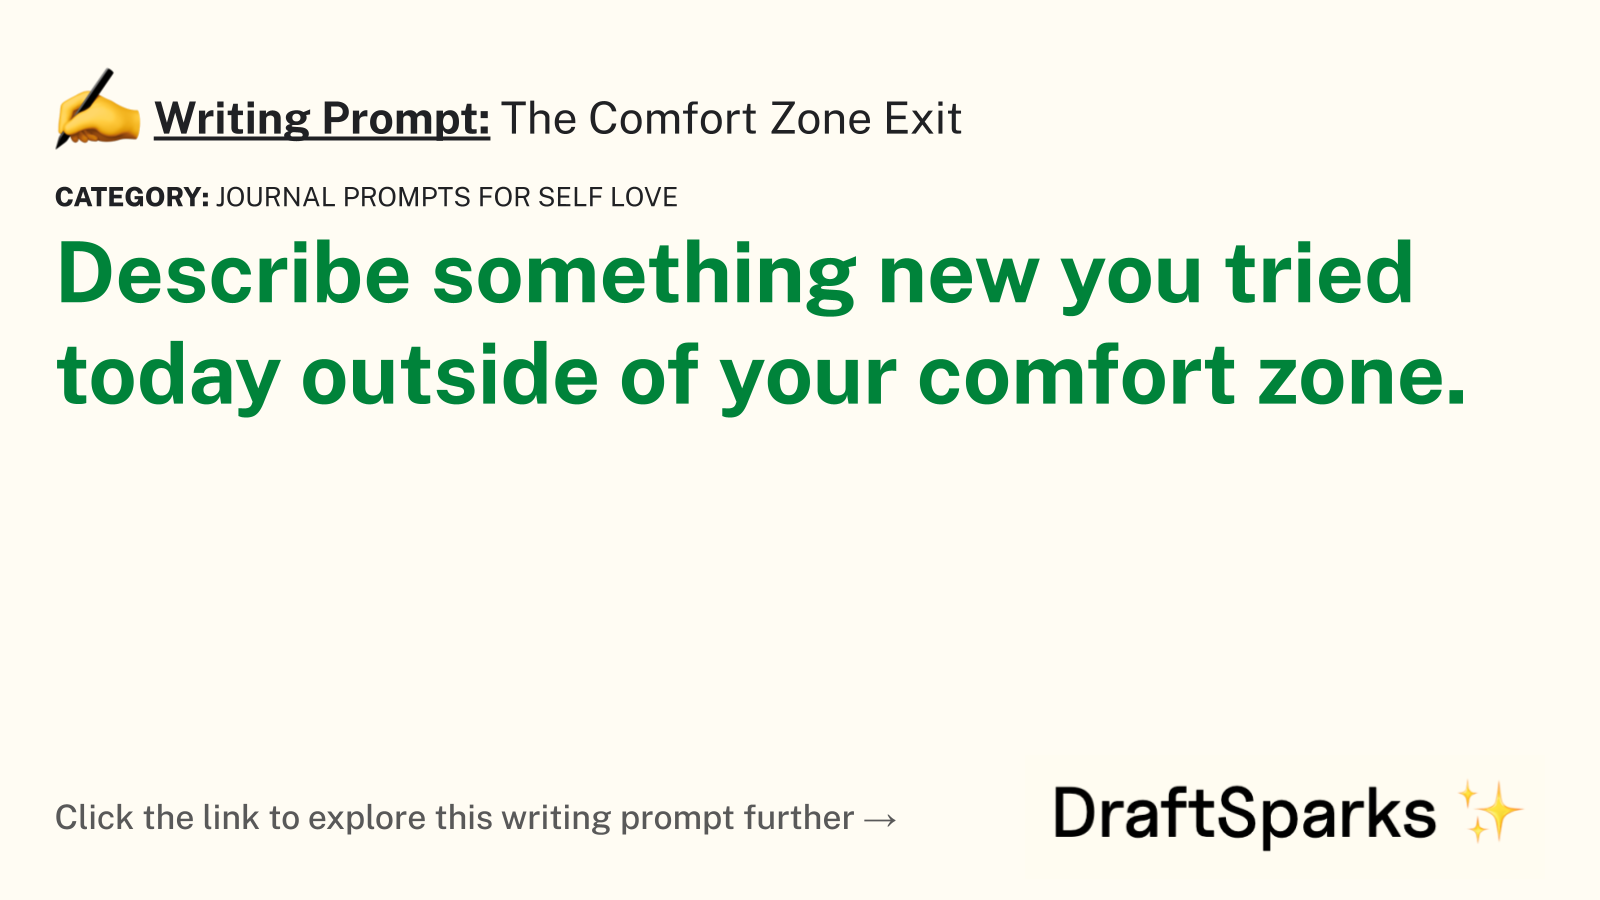 The Comfort Zone Exit